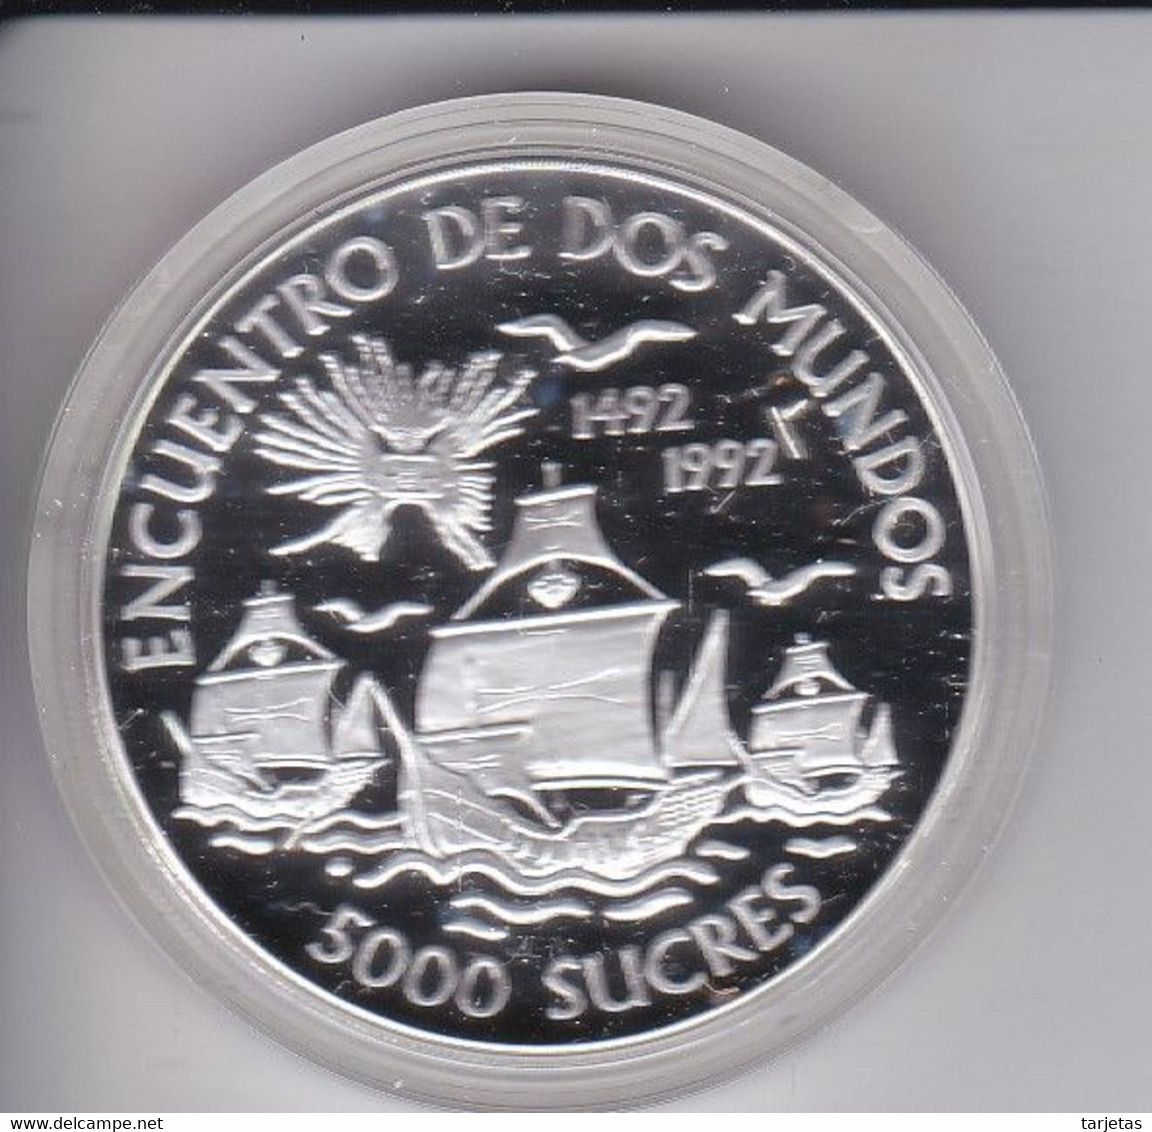 MONEDA PLATA DE ECUADOR DE 5000 SUCRES DEL AÑO 1991 ENCUENTRO ENTRE DOS MUNDOS (COIN)(SILVER-ARGENT) - Ecuador